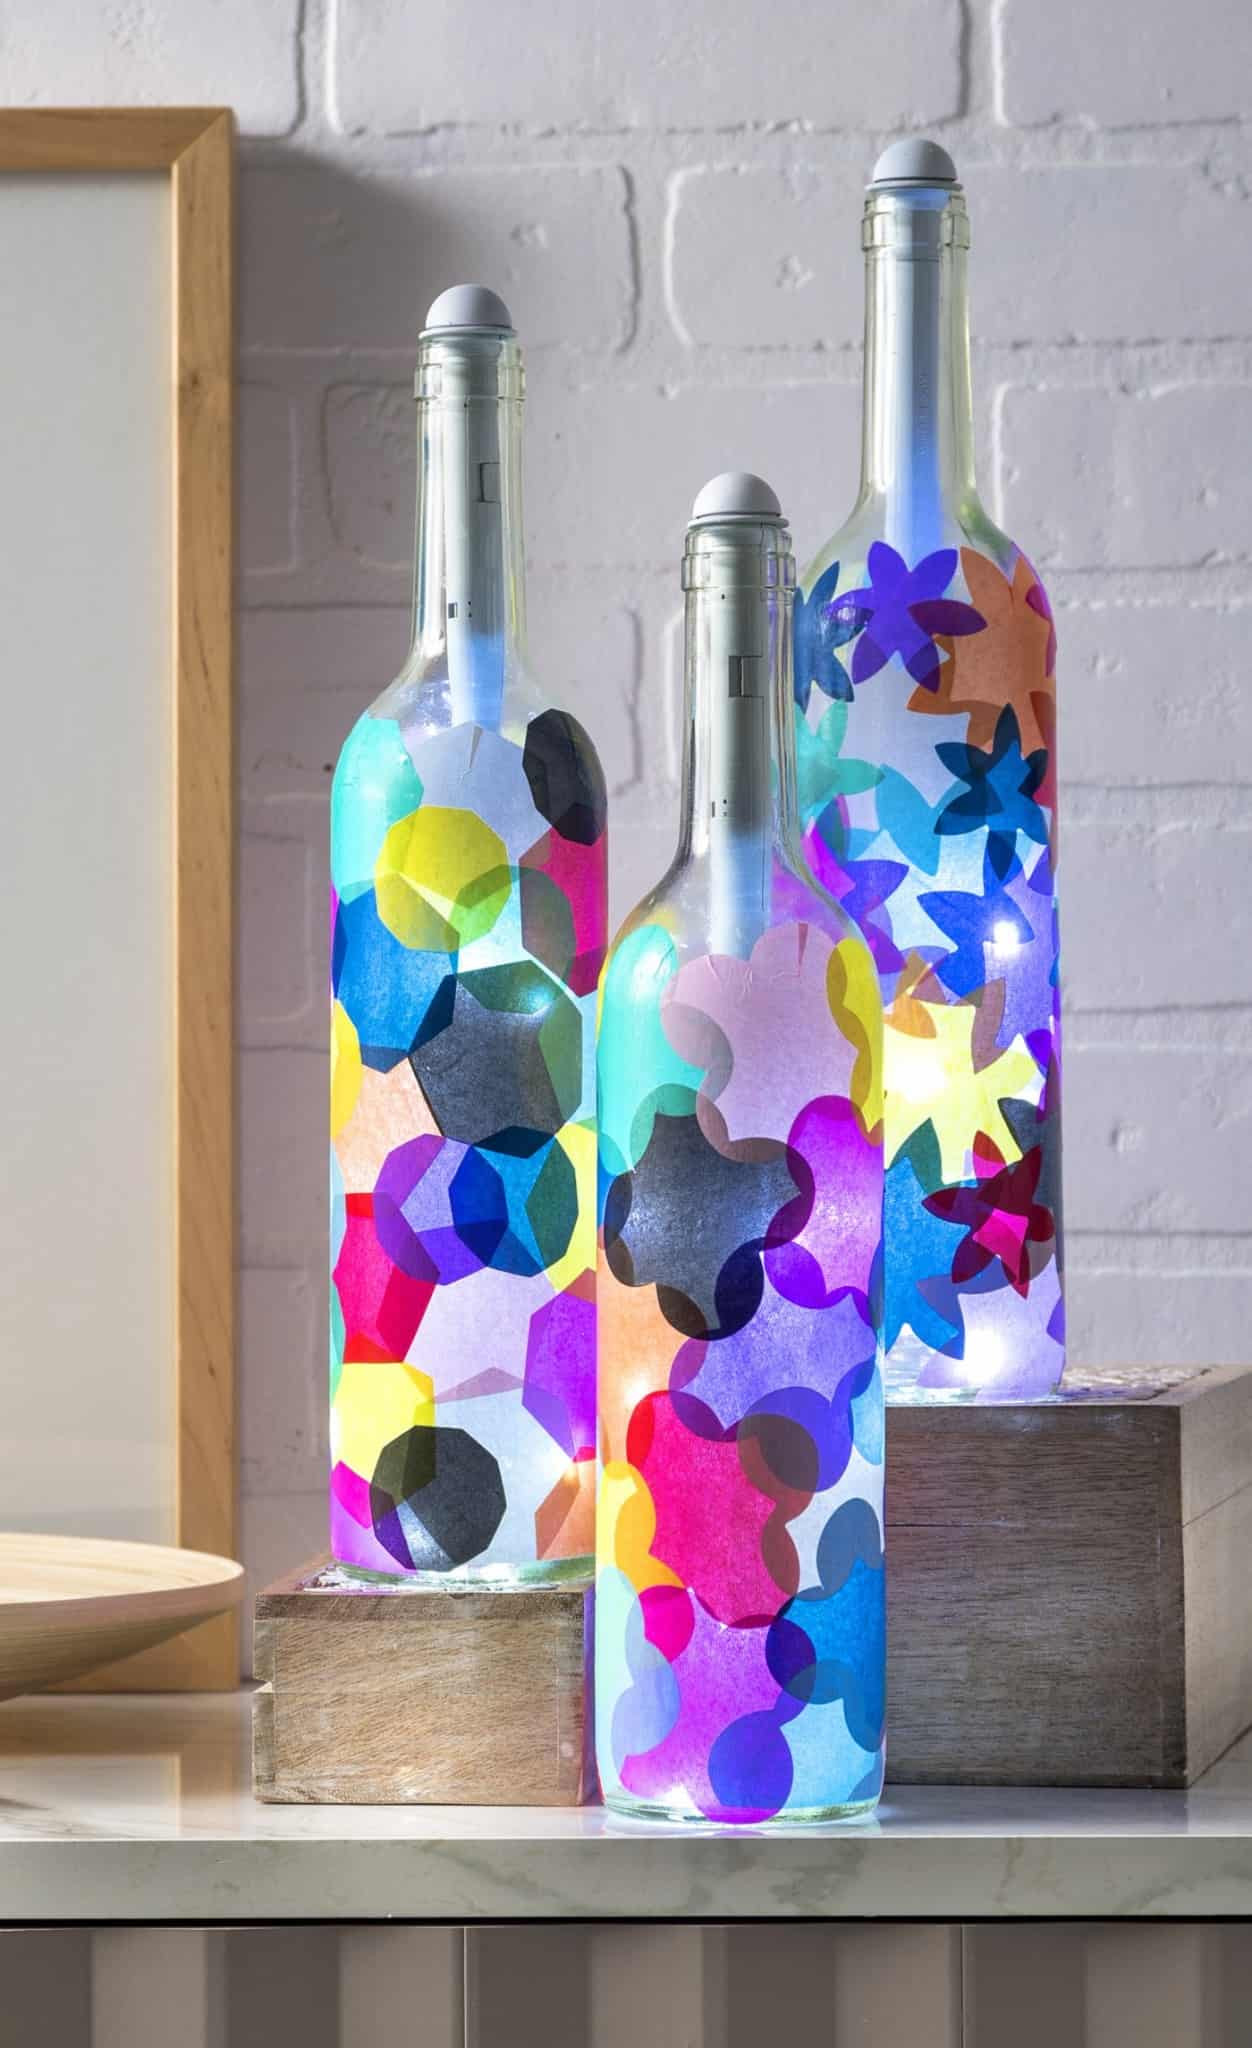 Best ideas about Wine Bottle Craft Ideas
. Save or Pin Wine bottle crafts light my bottles Mod Podge Rocks Now.